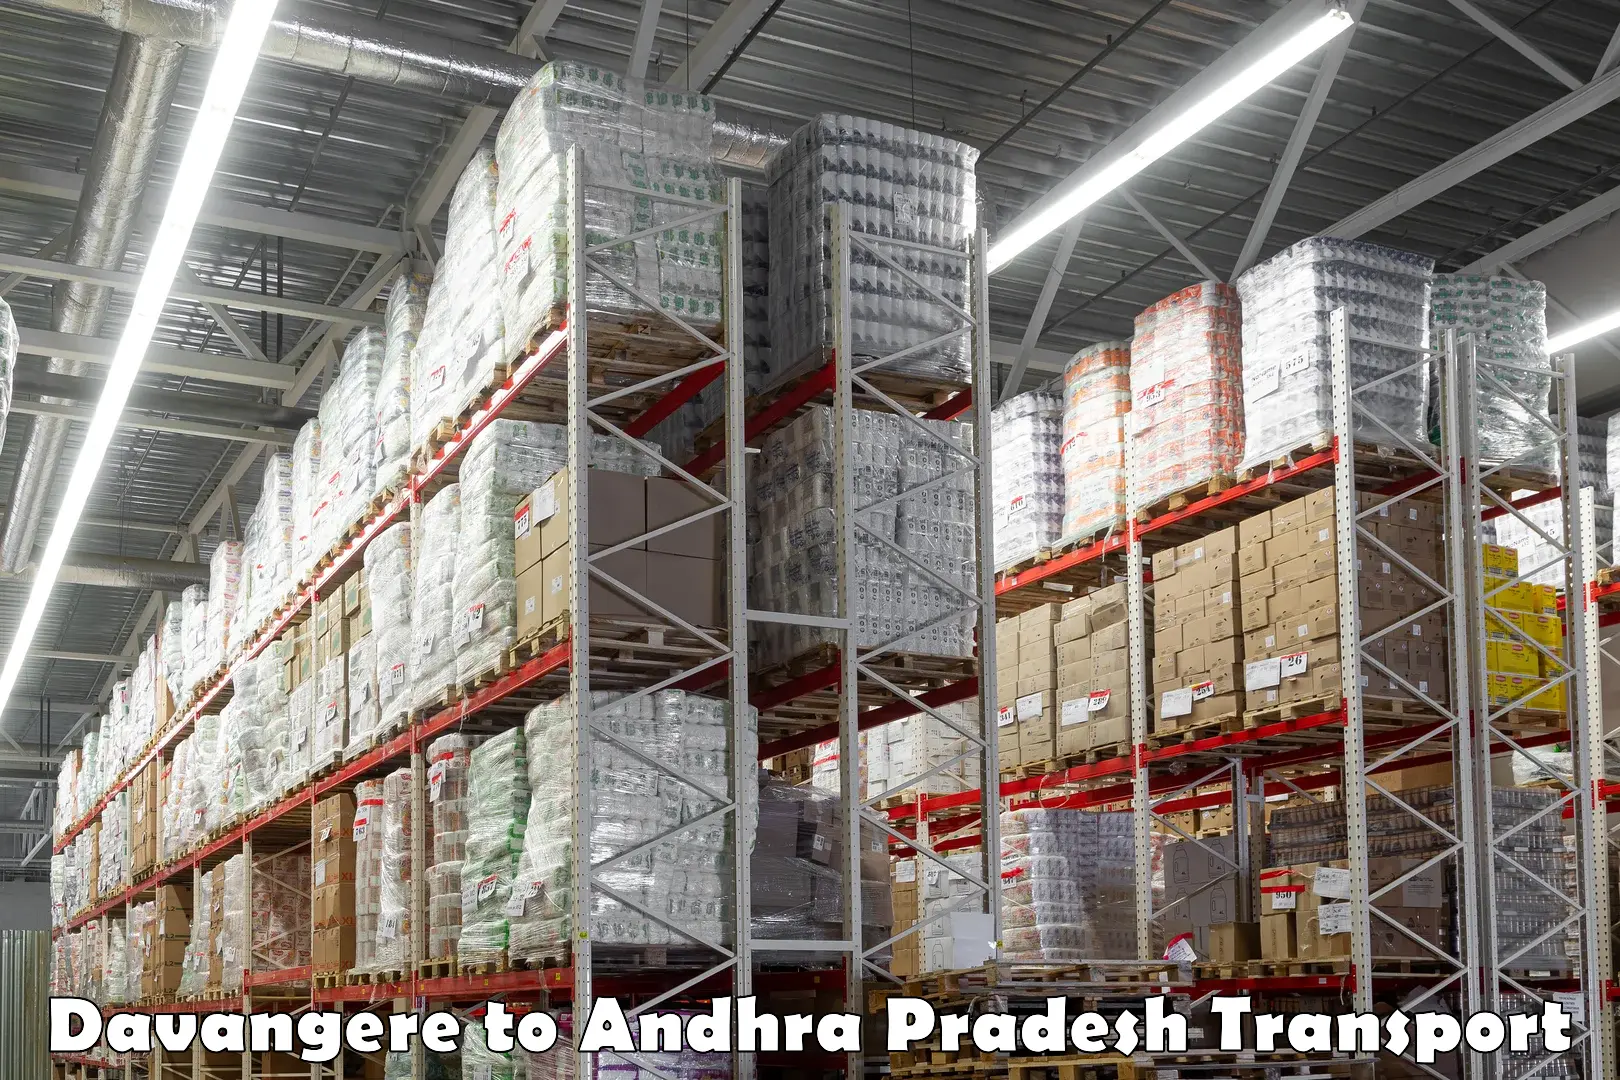 Truck transport companies in India Davangere to Andhra Pradesh